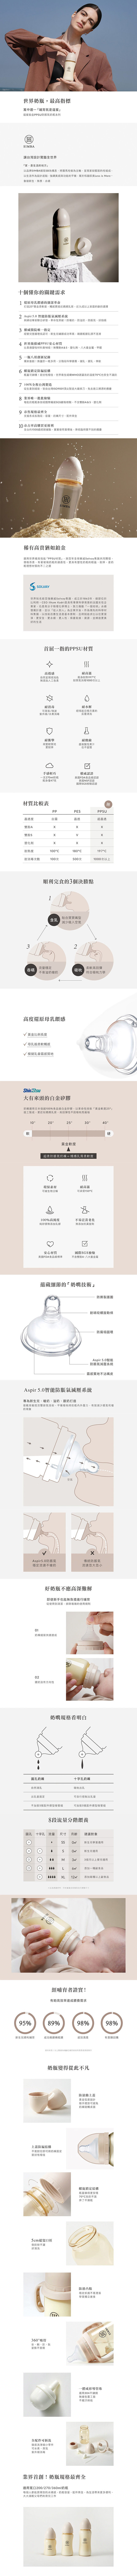 simba allonge ppsu wide neck anti colic feeding bottles 小狮王辛巴防胀风奶瓶